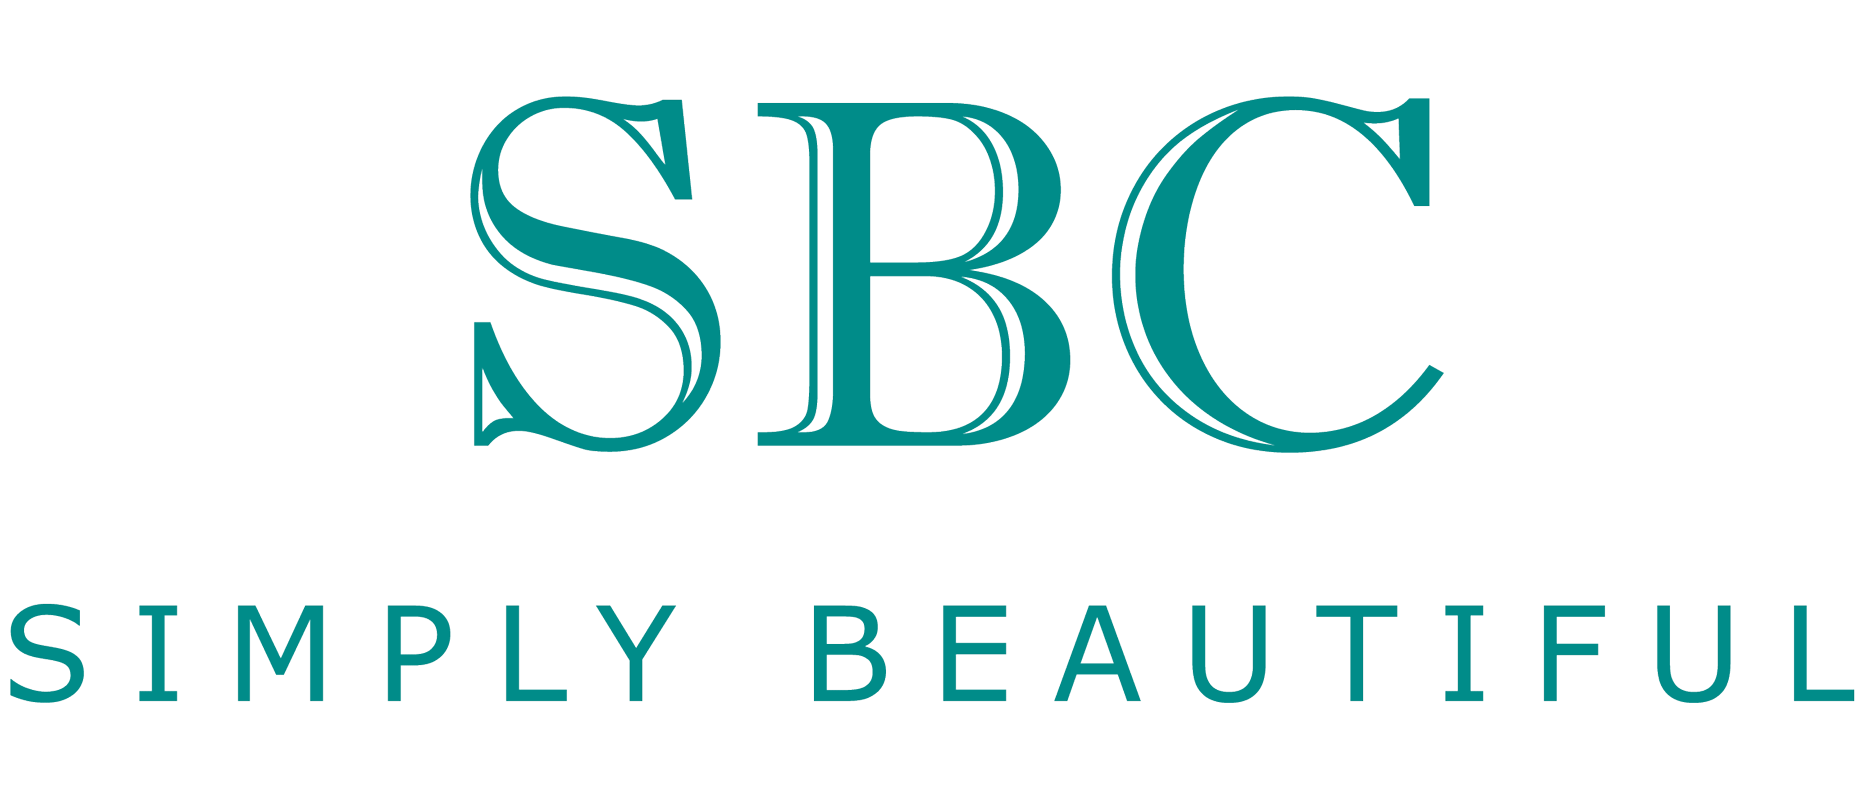 Simply косметика лого. Decus логотип. Simply pretty лого. ООО SBC логотип.